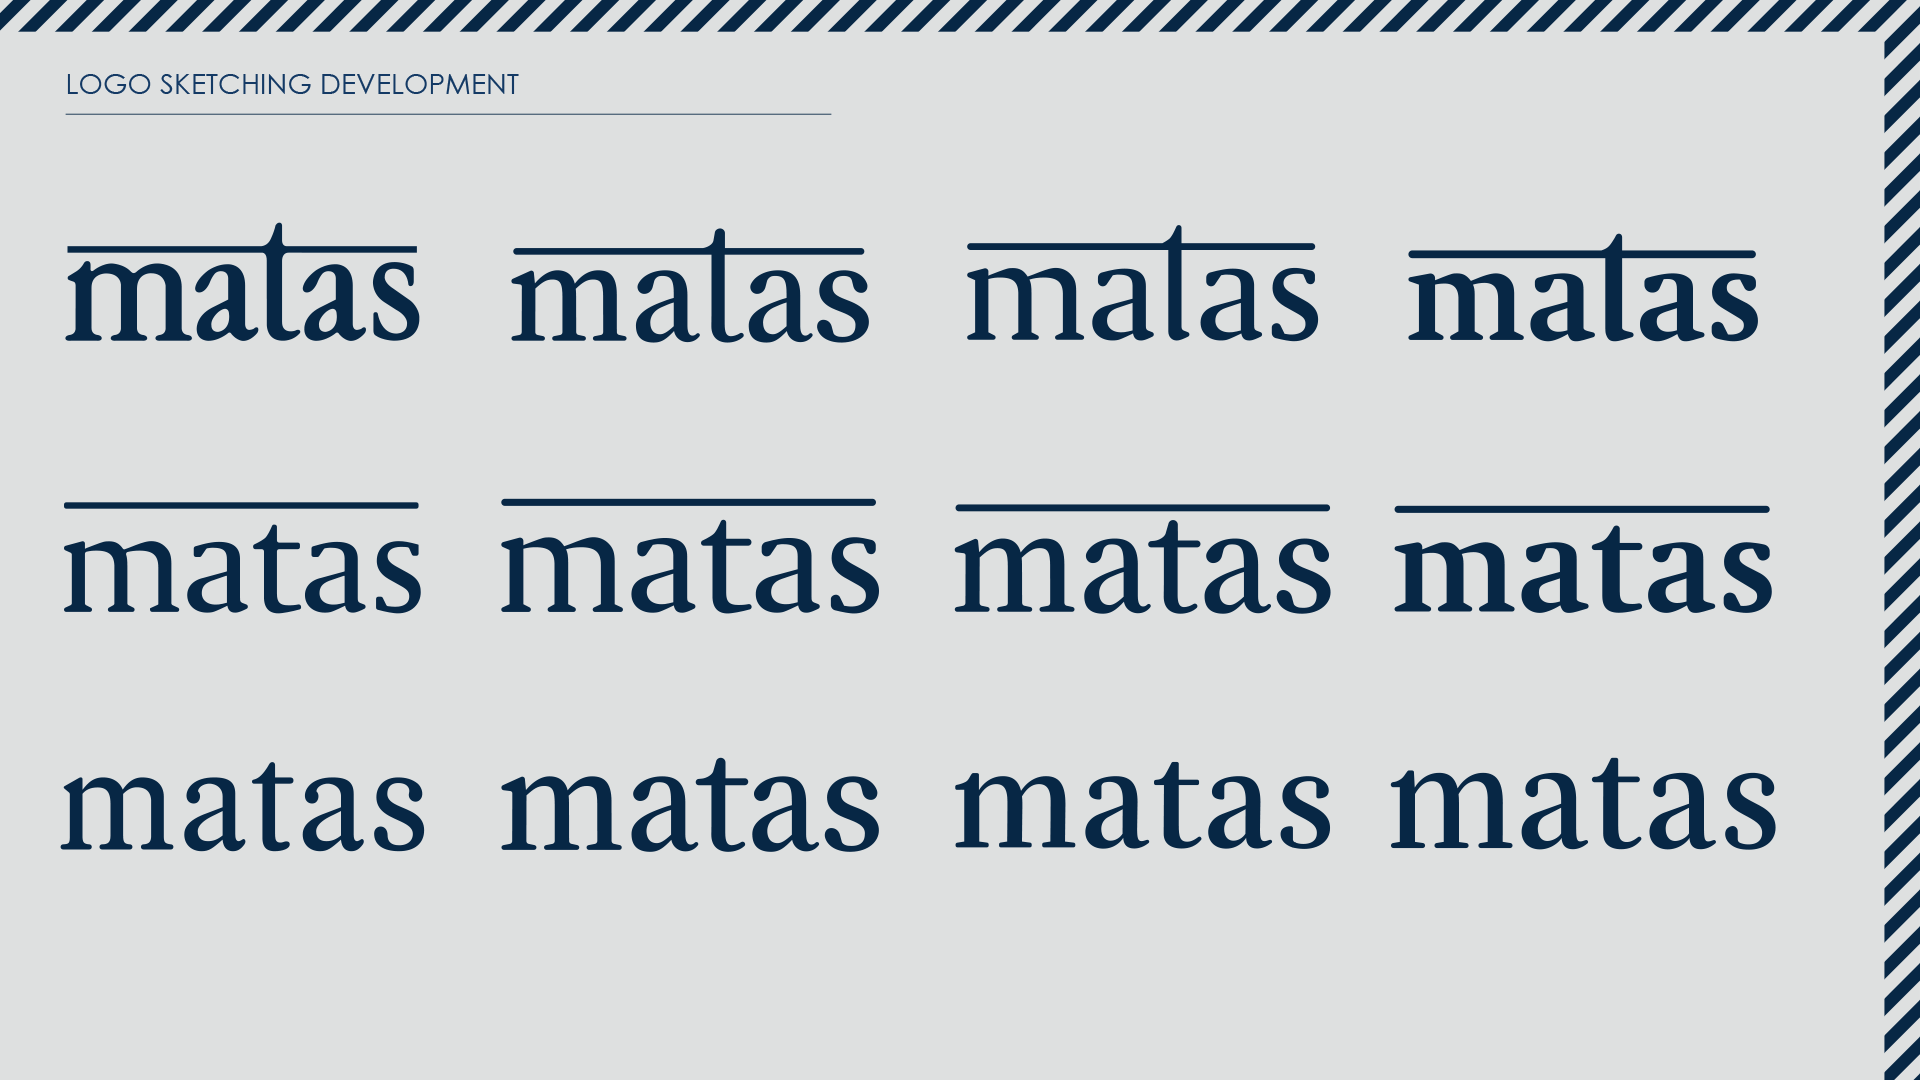 Matas logo development by LOOP Associates